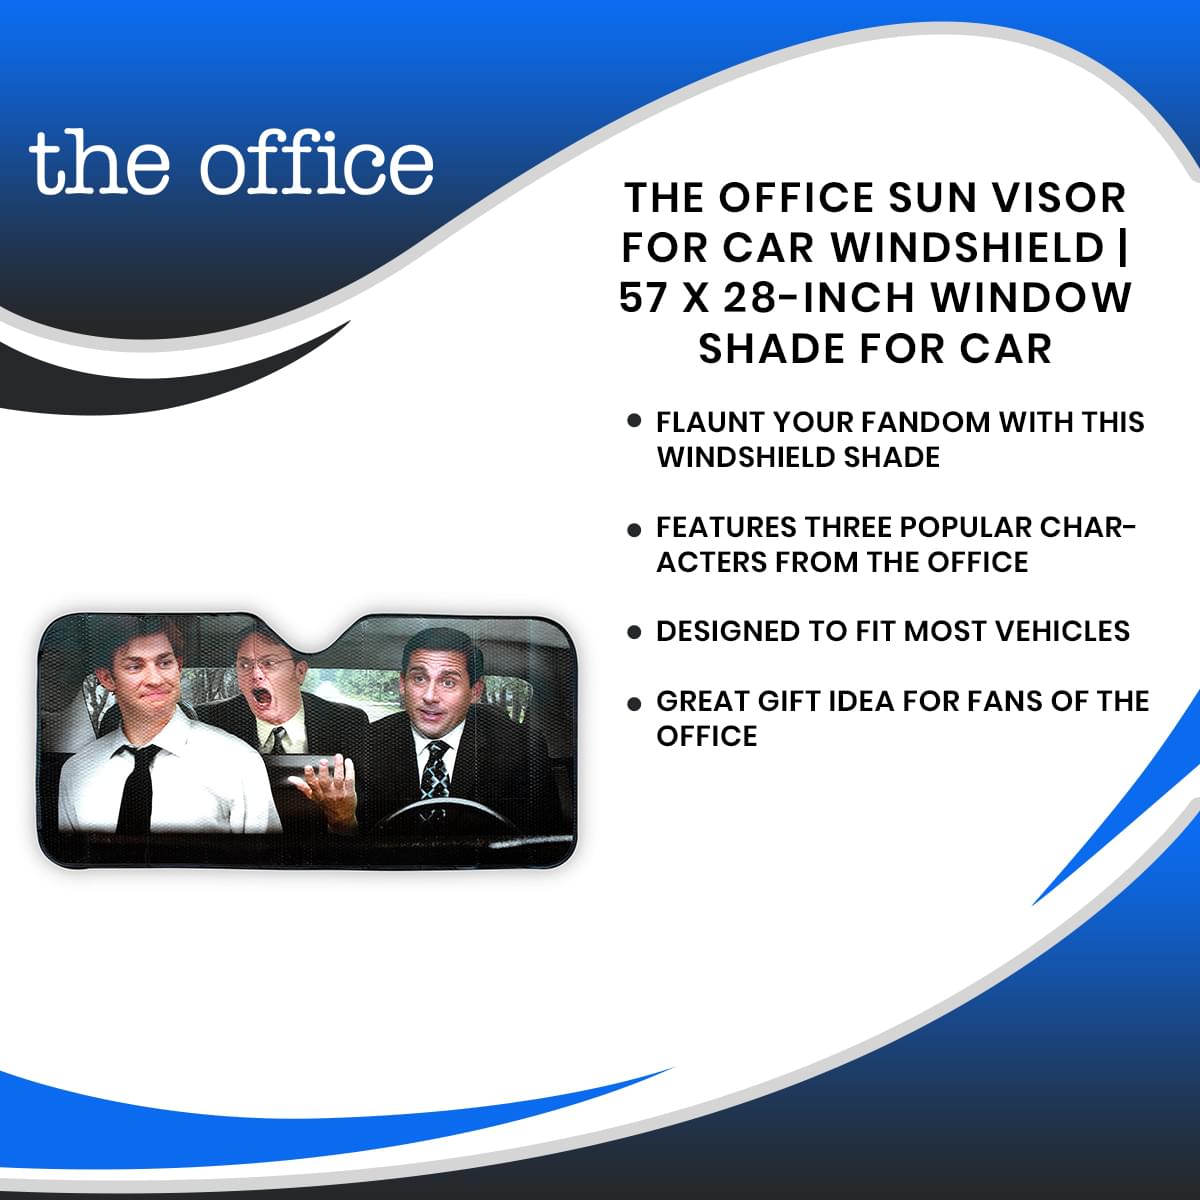 The Office Sun Visor for Car Windshield | 57 x 28-Inch Window Shade for Car